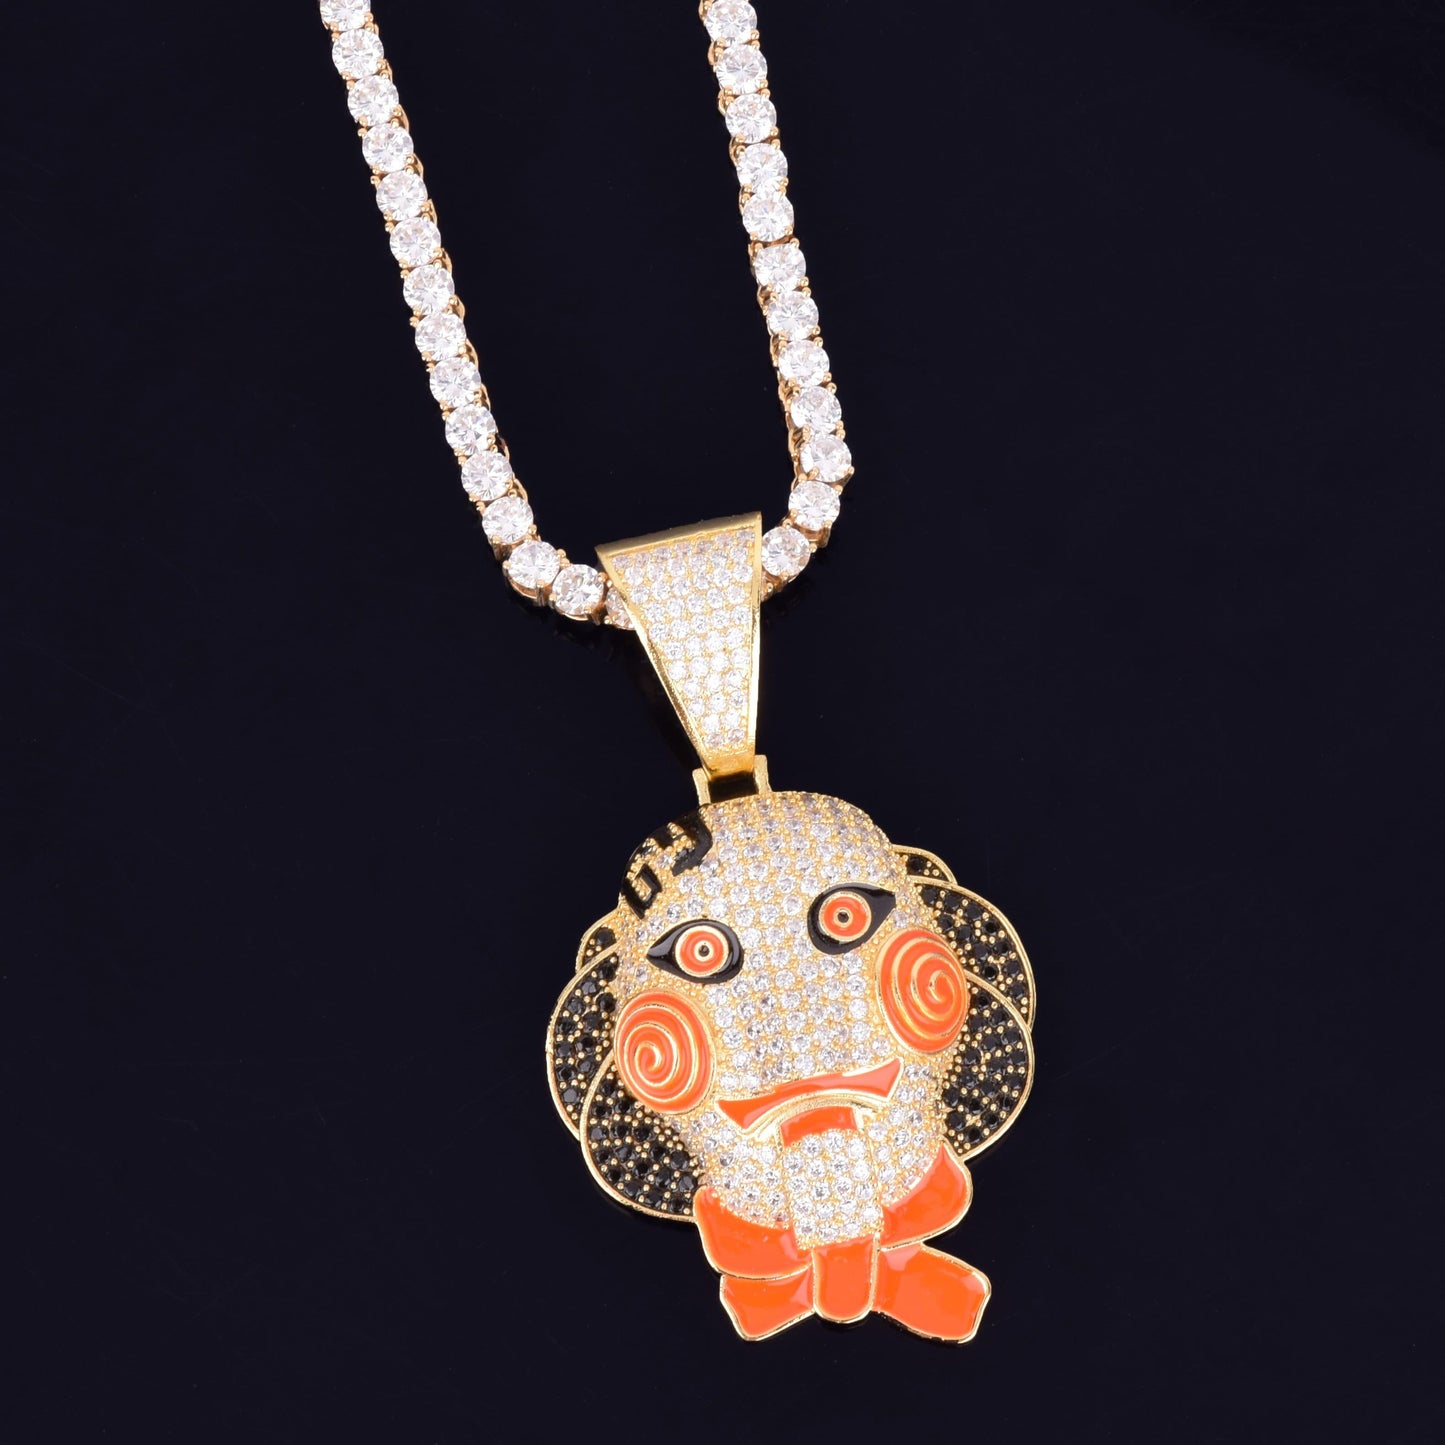 Personality Cartoon face Pendant Necklace Charm Gold Color Ice Cubic Zircon Men's Hip hop Rock Jewelry